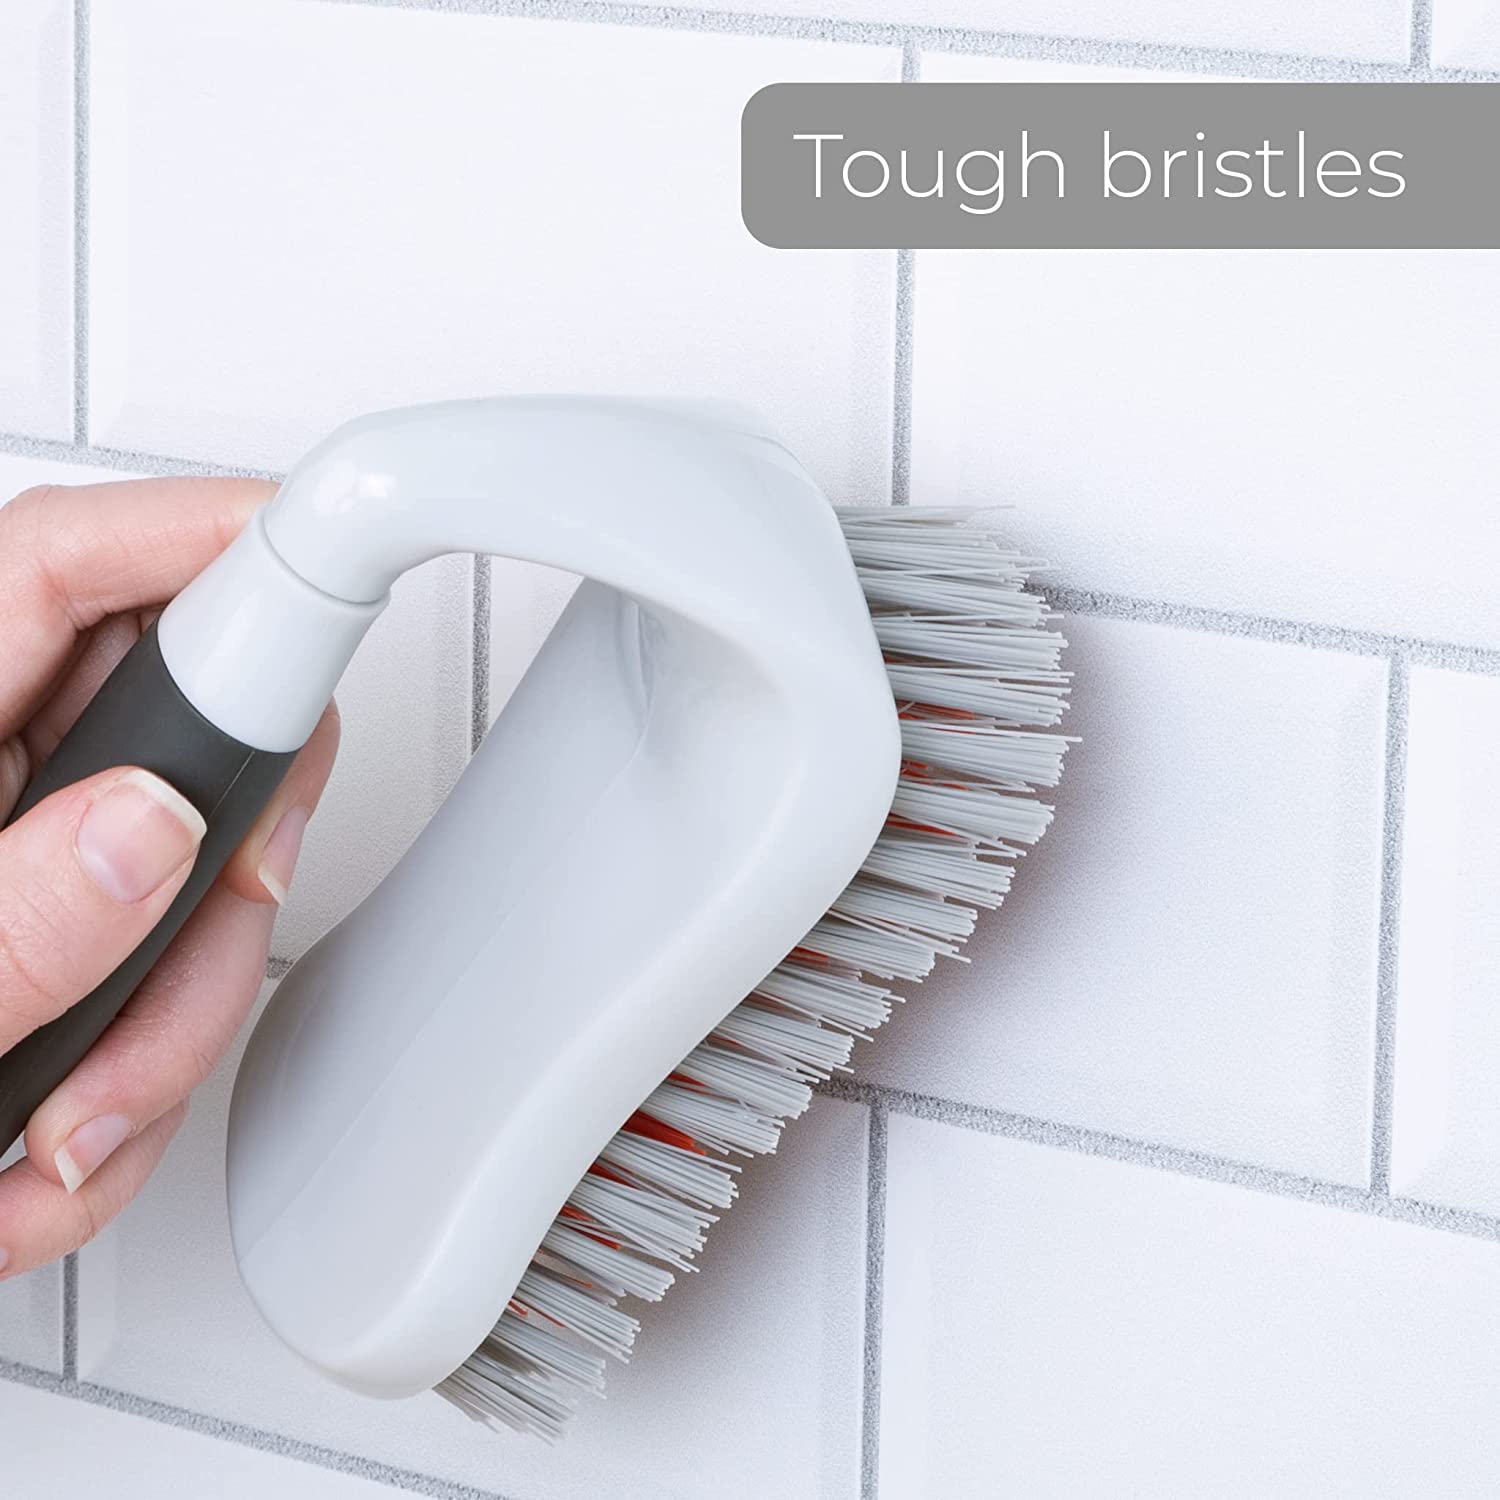 All-Purpose Scrub Brush  Smart Design® Cleaning